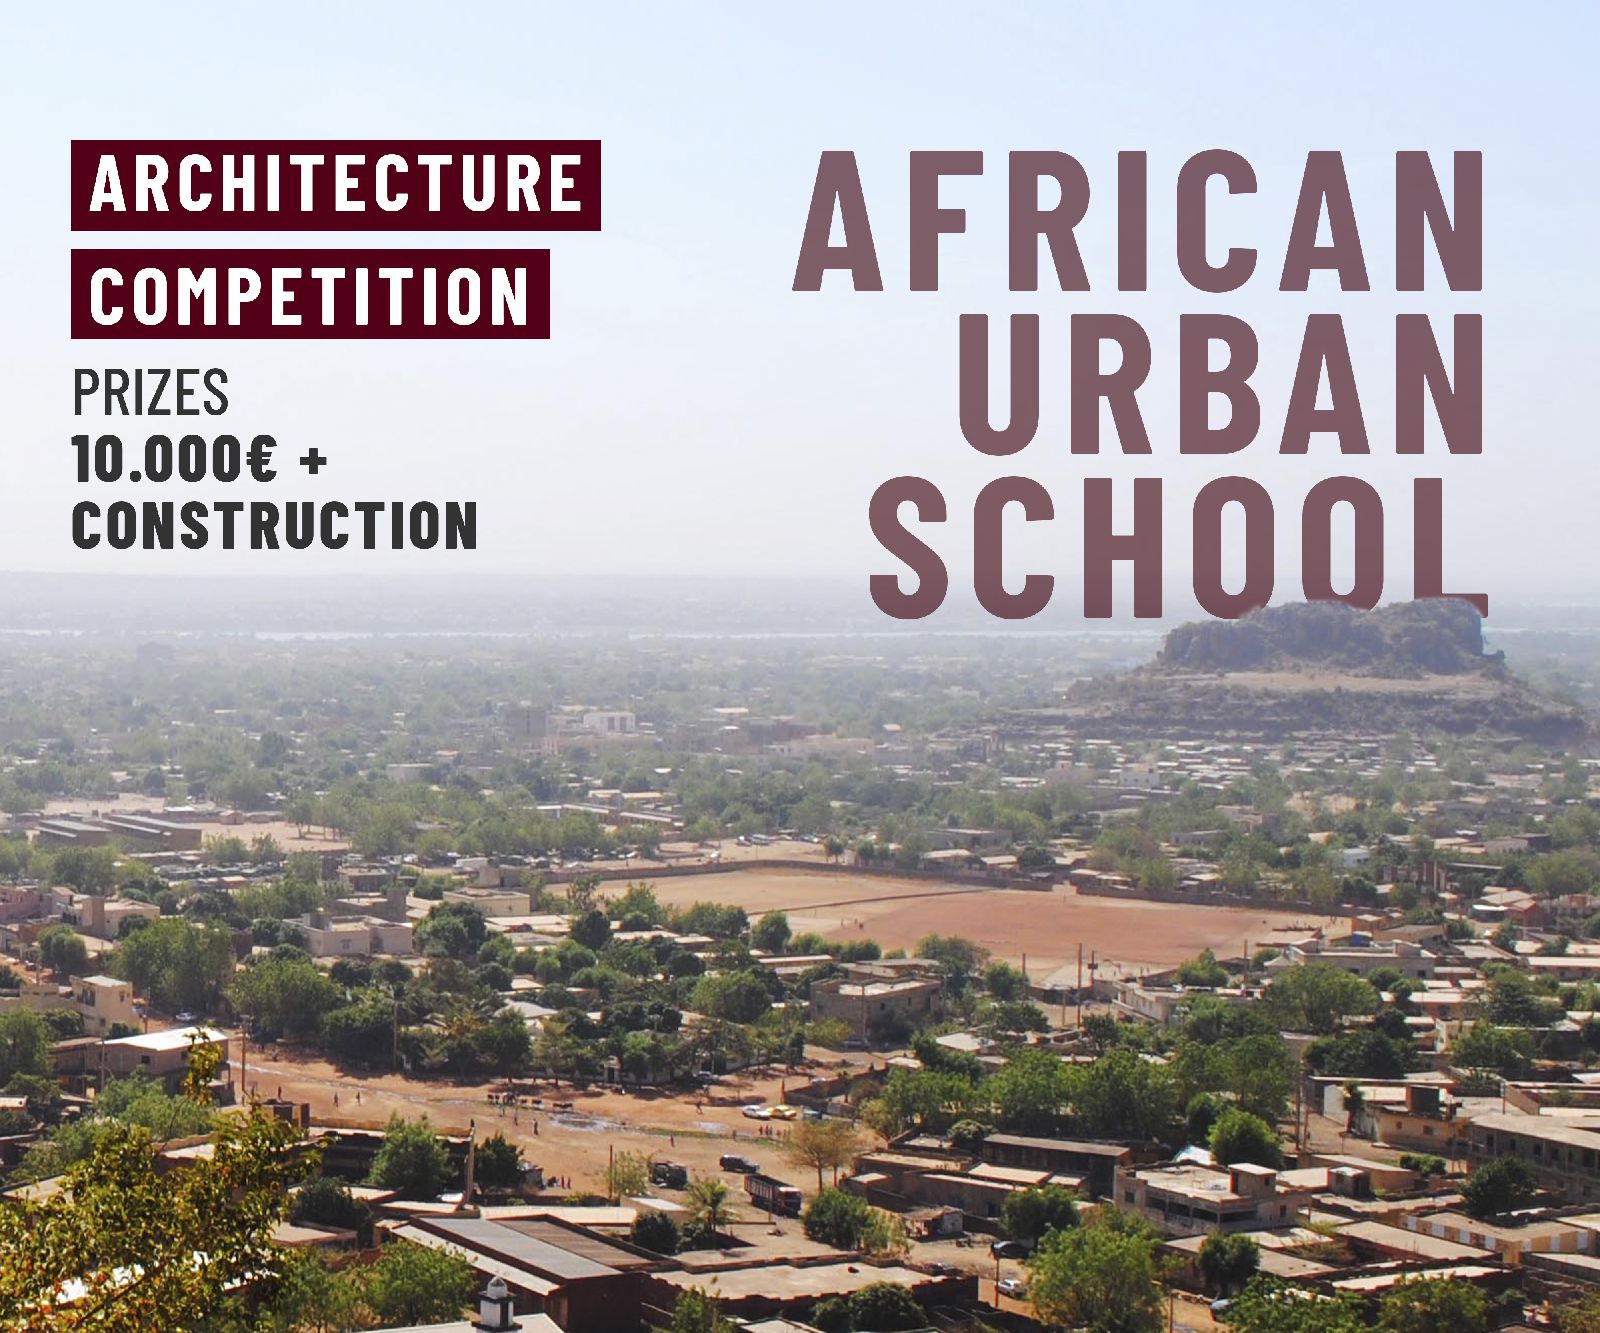 African Urban School